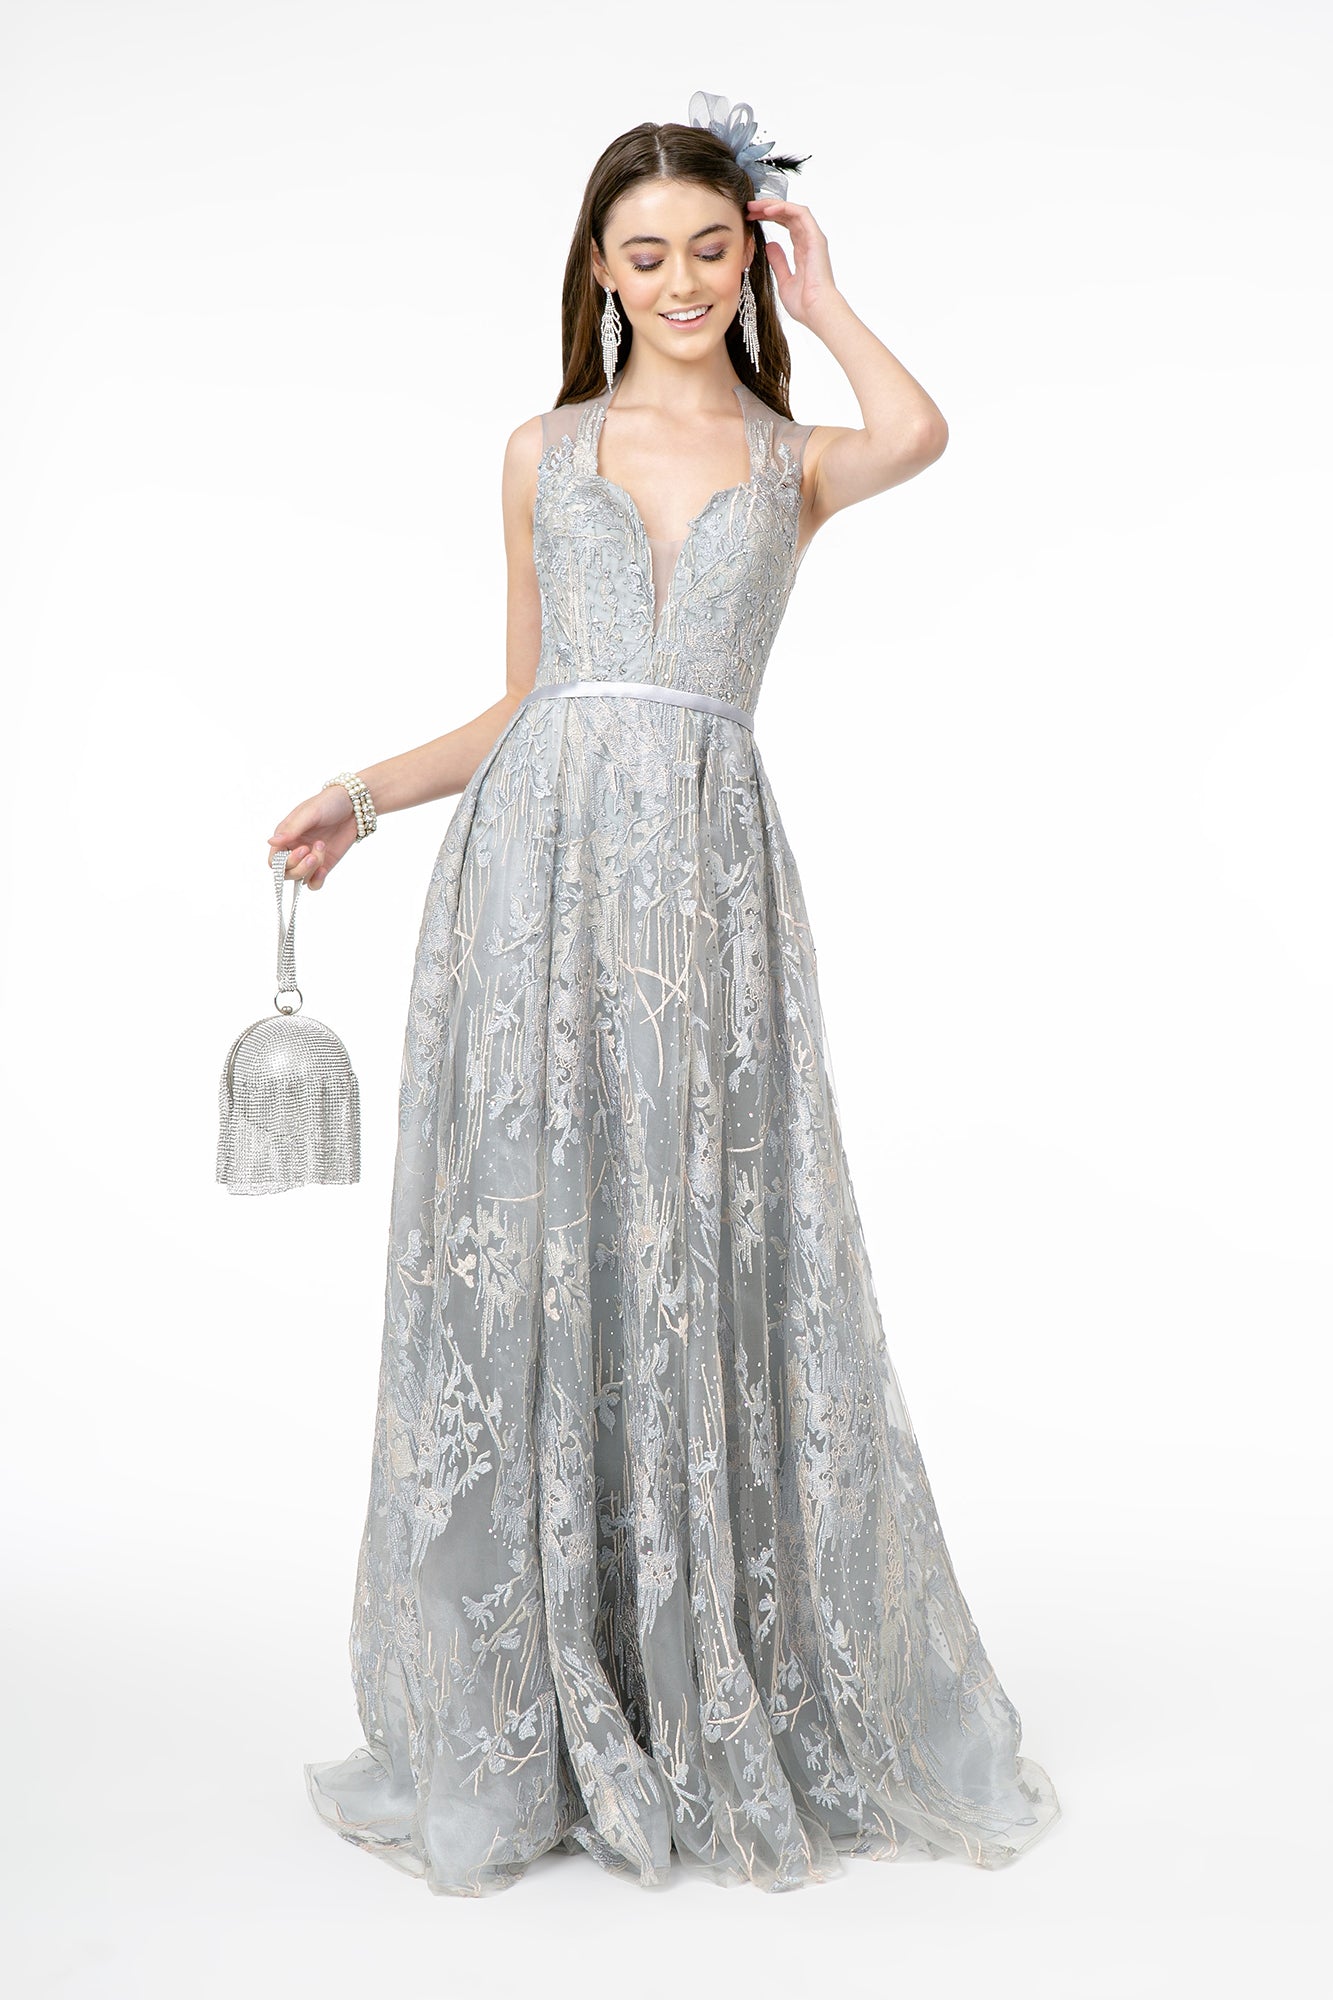 Lace Embellished A-Line Long Dress GLGL2835-SPECIAL-smcfashion.com